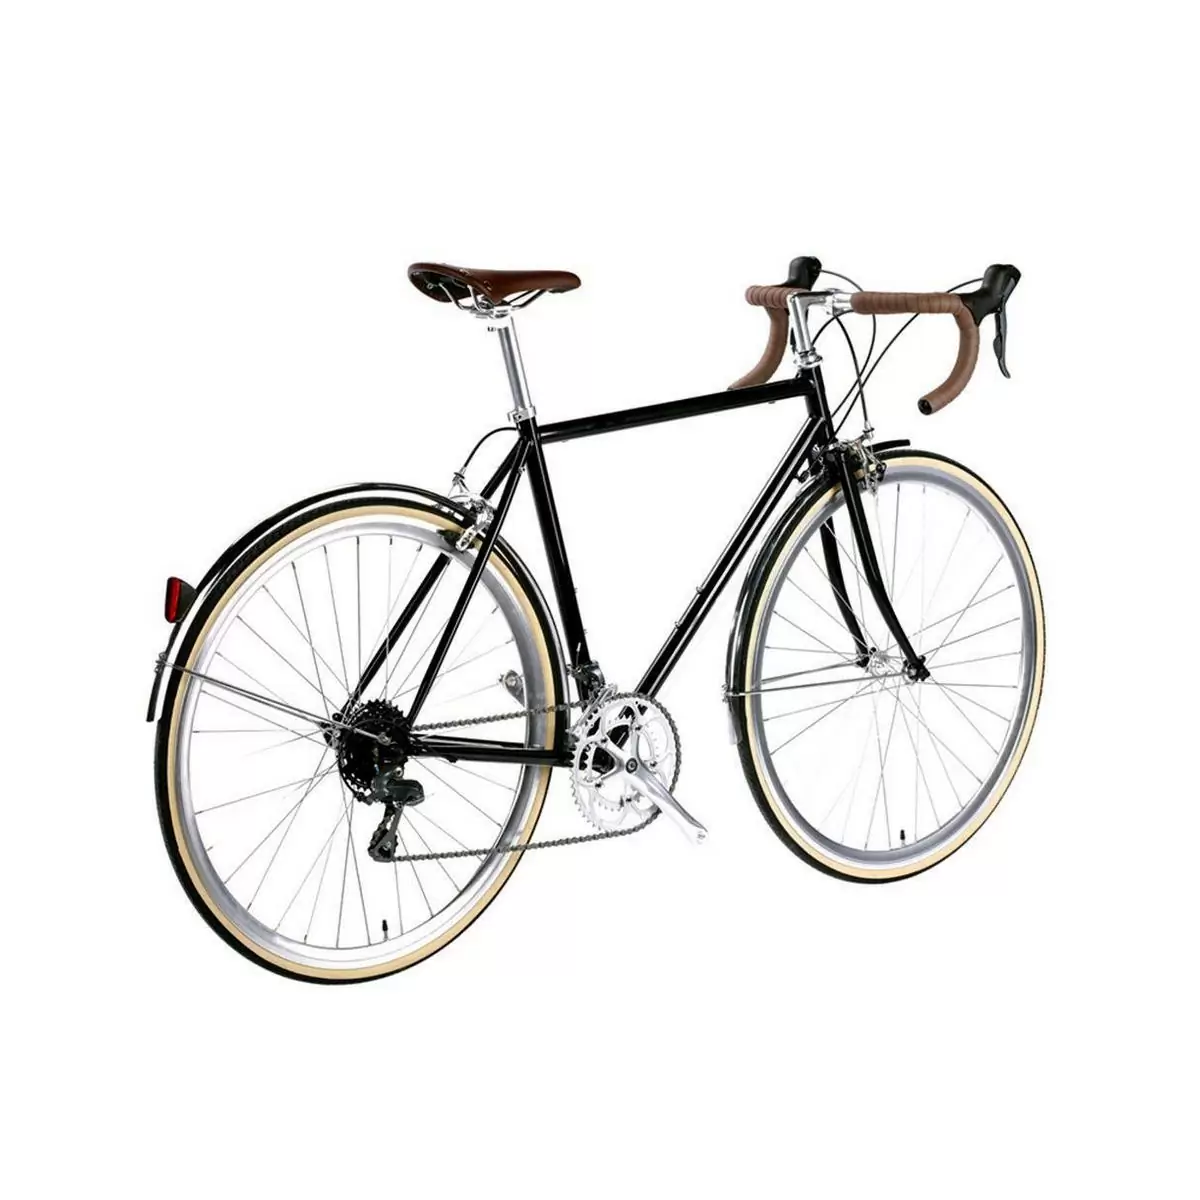 City bike TROY 16spd Del Rey black large 58cm #2